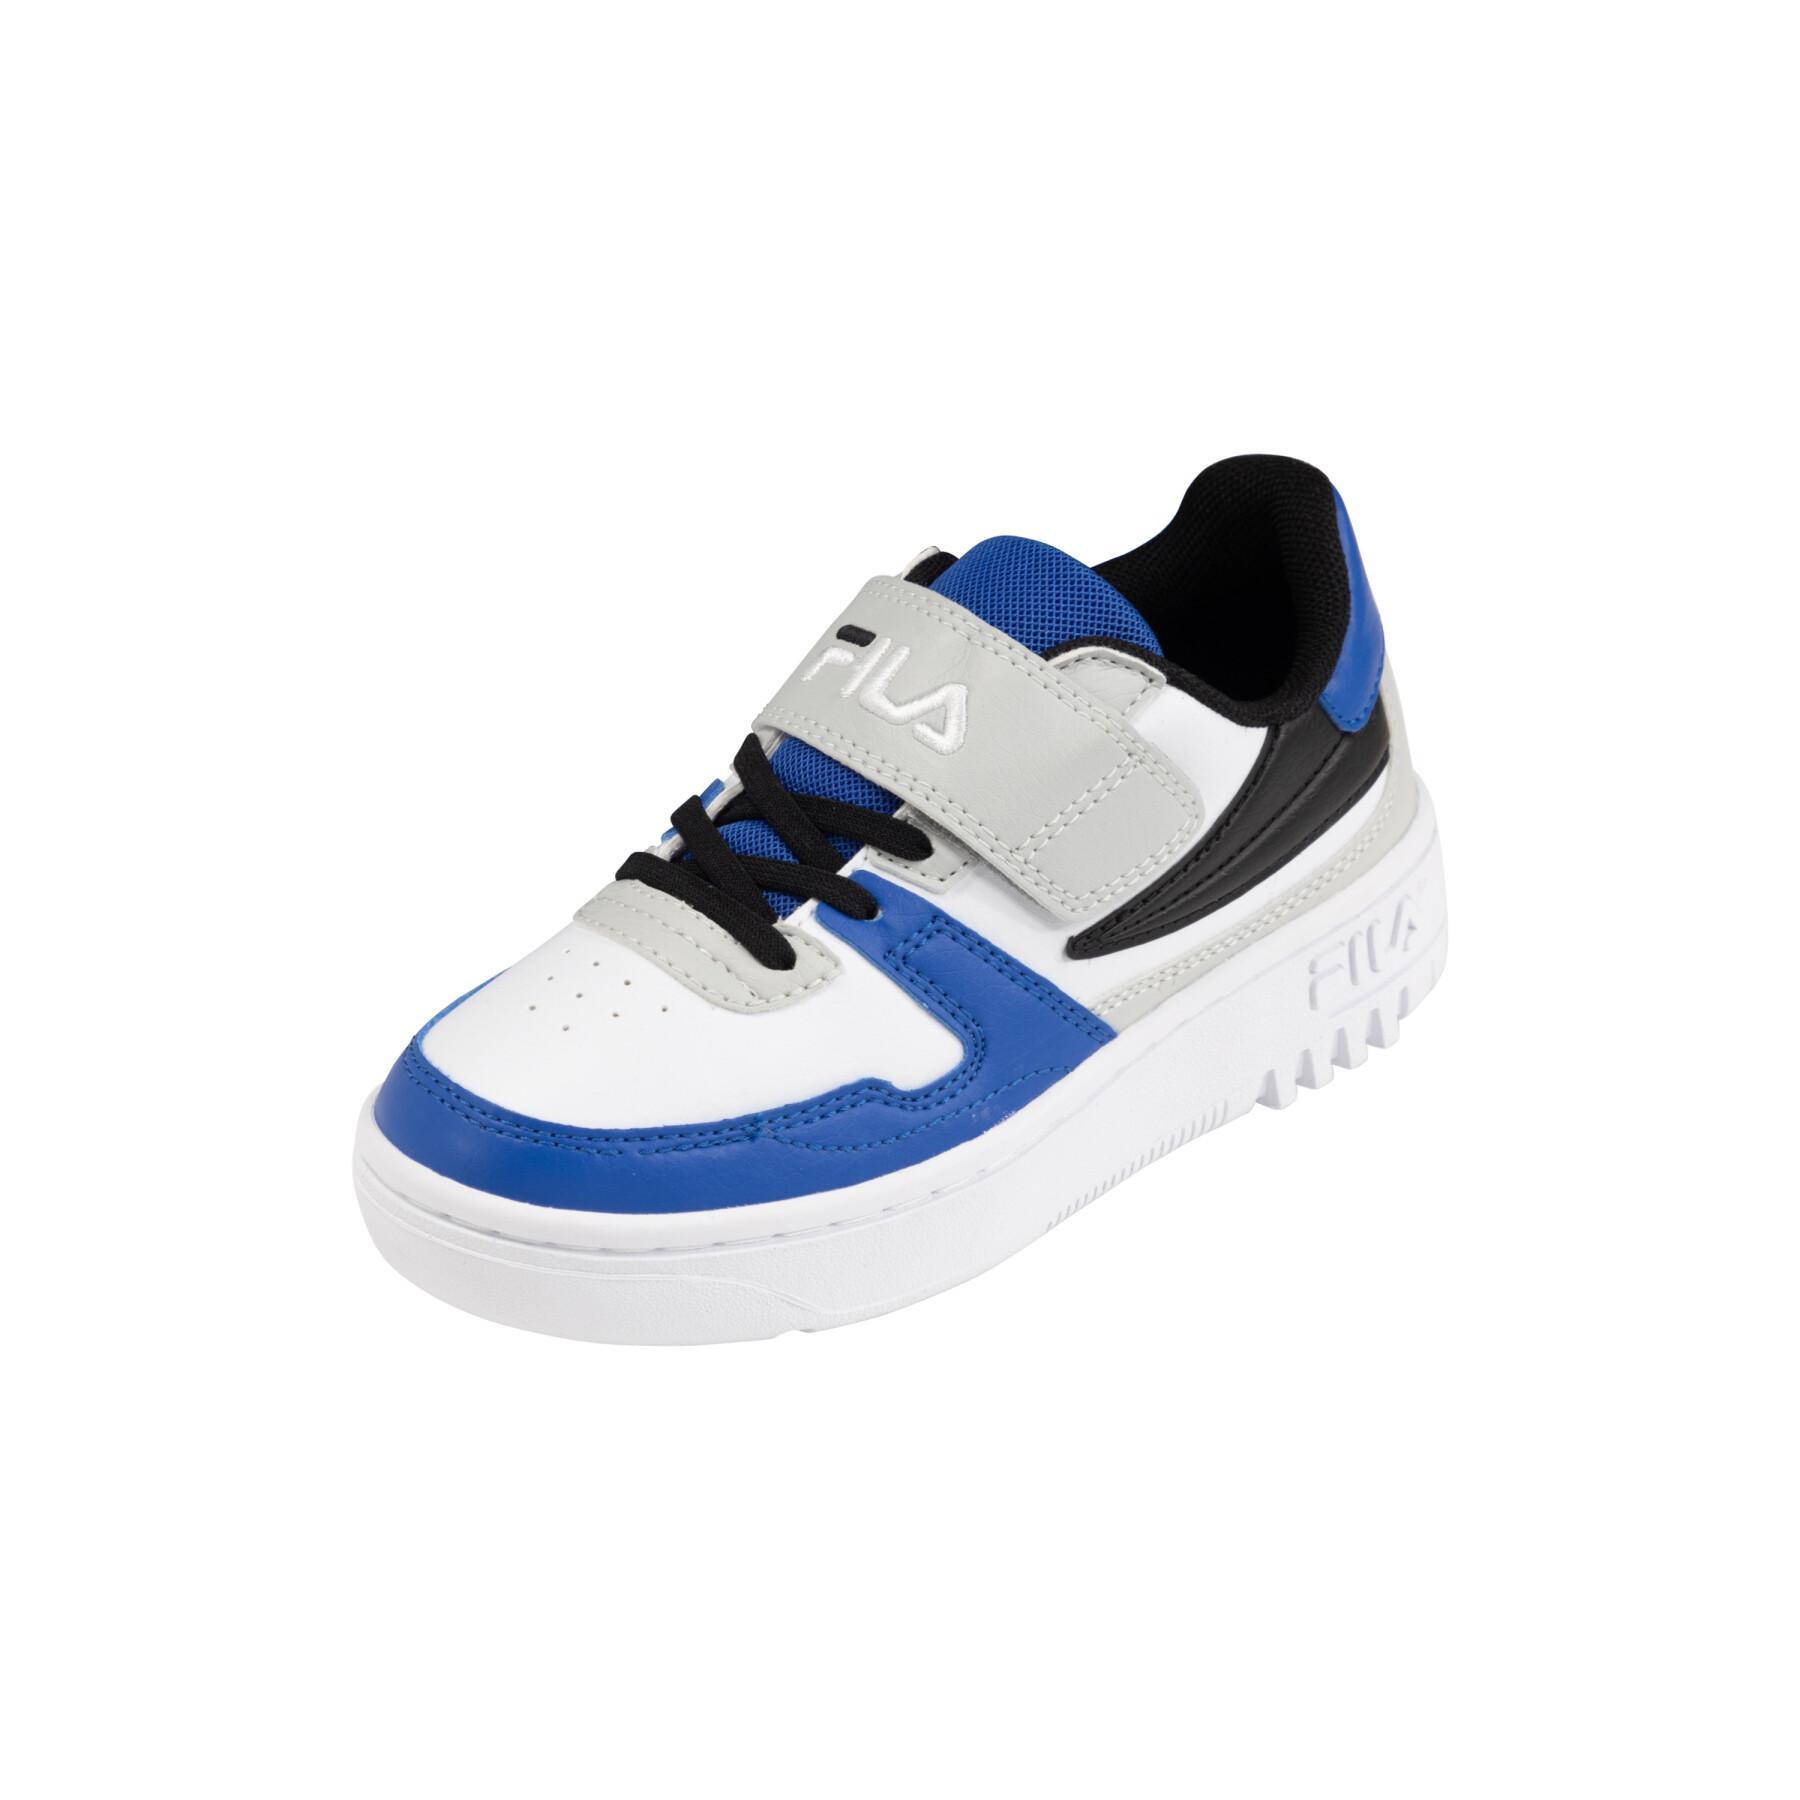 Velcro sneakers for kids Fila Fxventuno